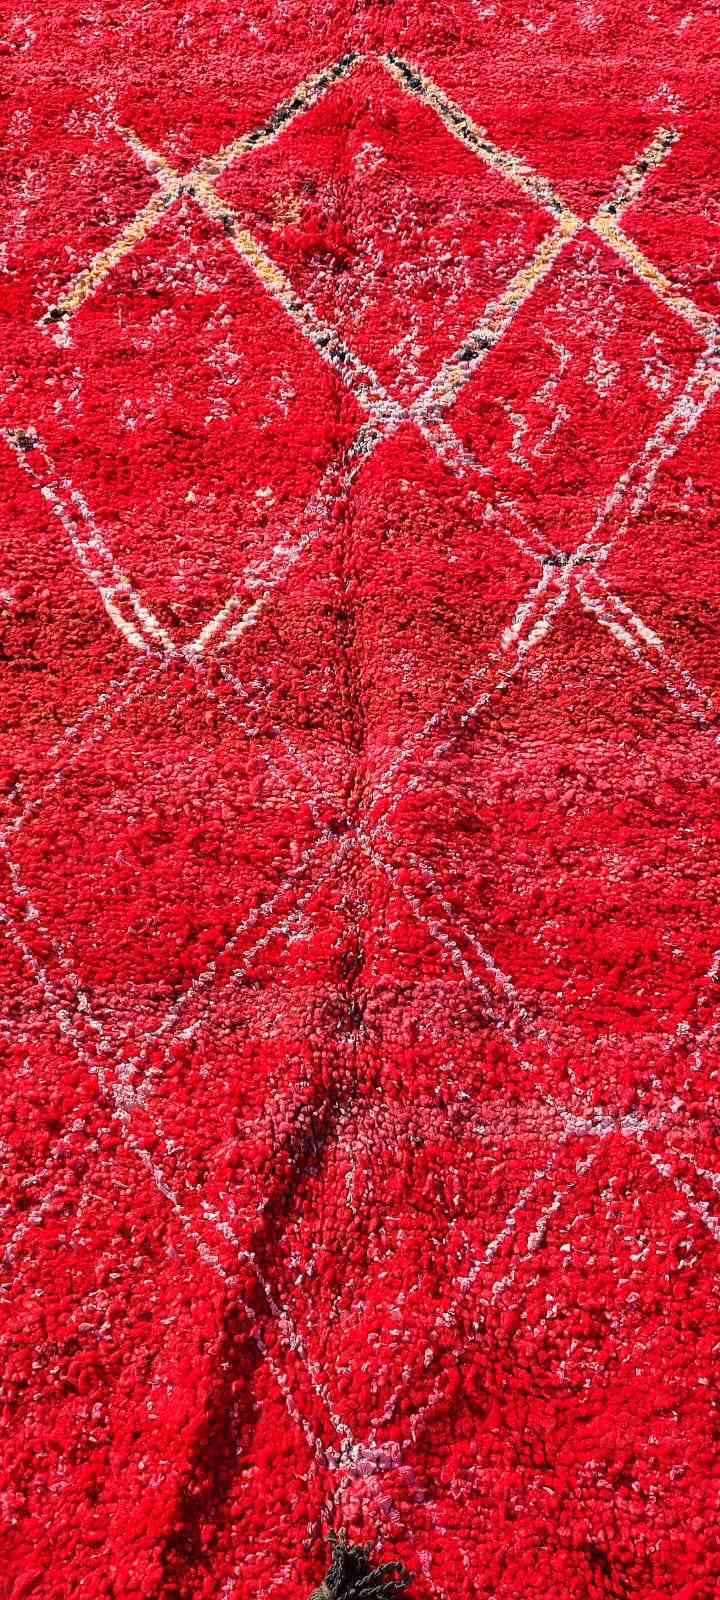 292 x 186 cm Morocon Berber Red Tribal Red Large Rug - Rugmaster